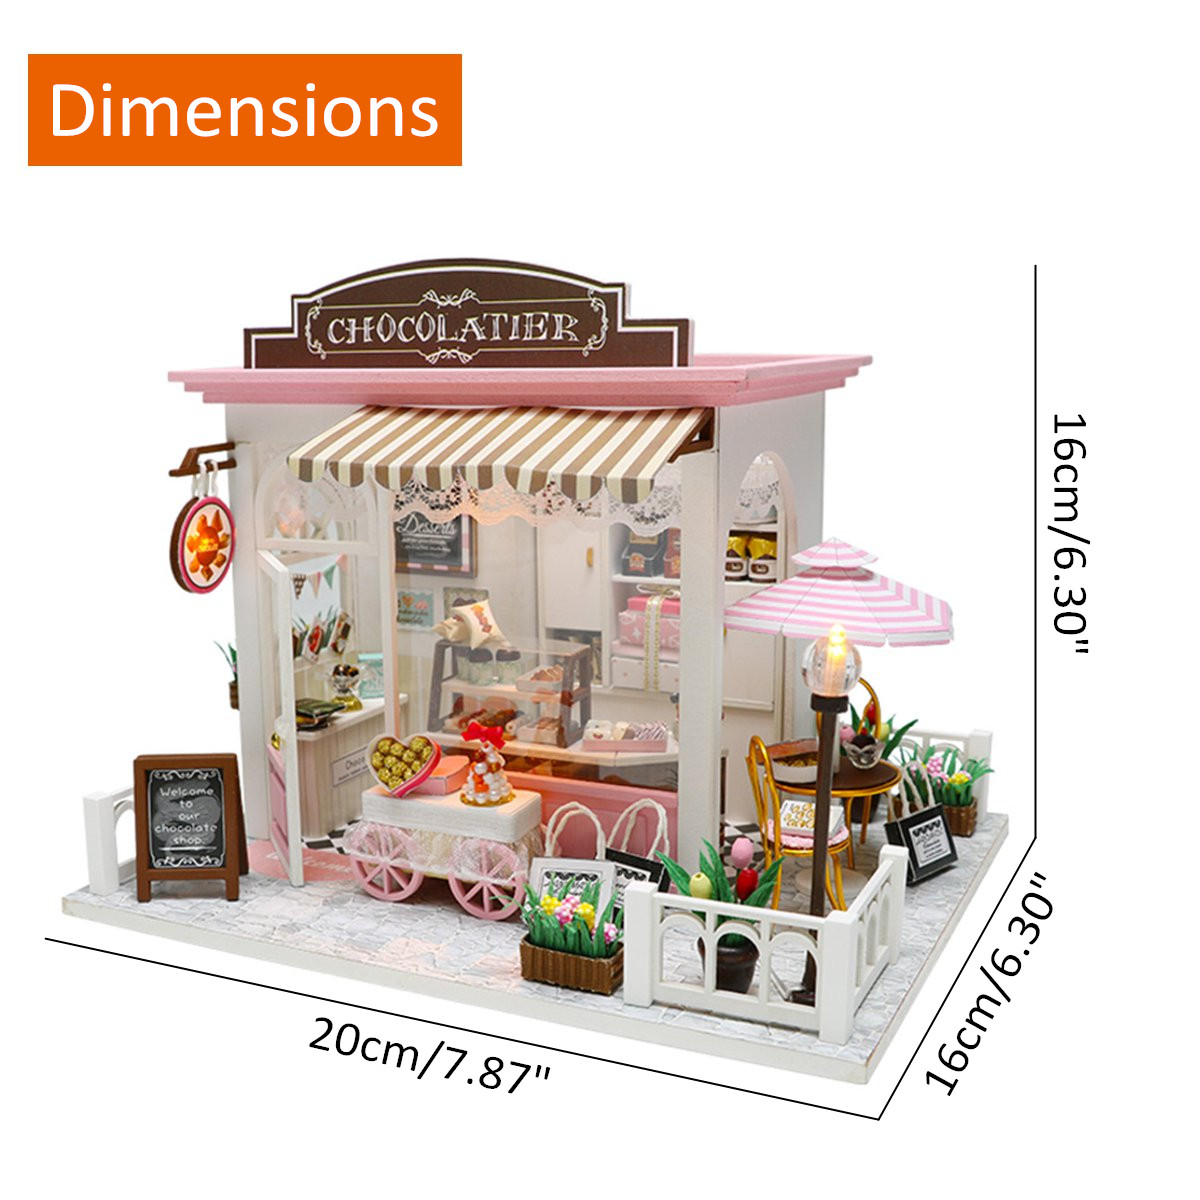 Doll-House-Kit-DIY-Miniature-Wooden-Handmade-House-Cake-Shop-Kids-Craft-Toys-1416102